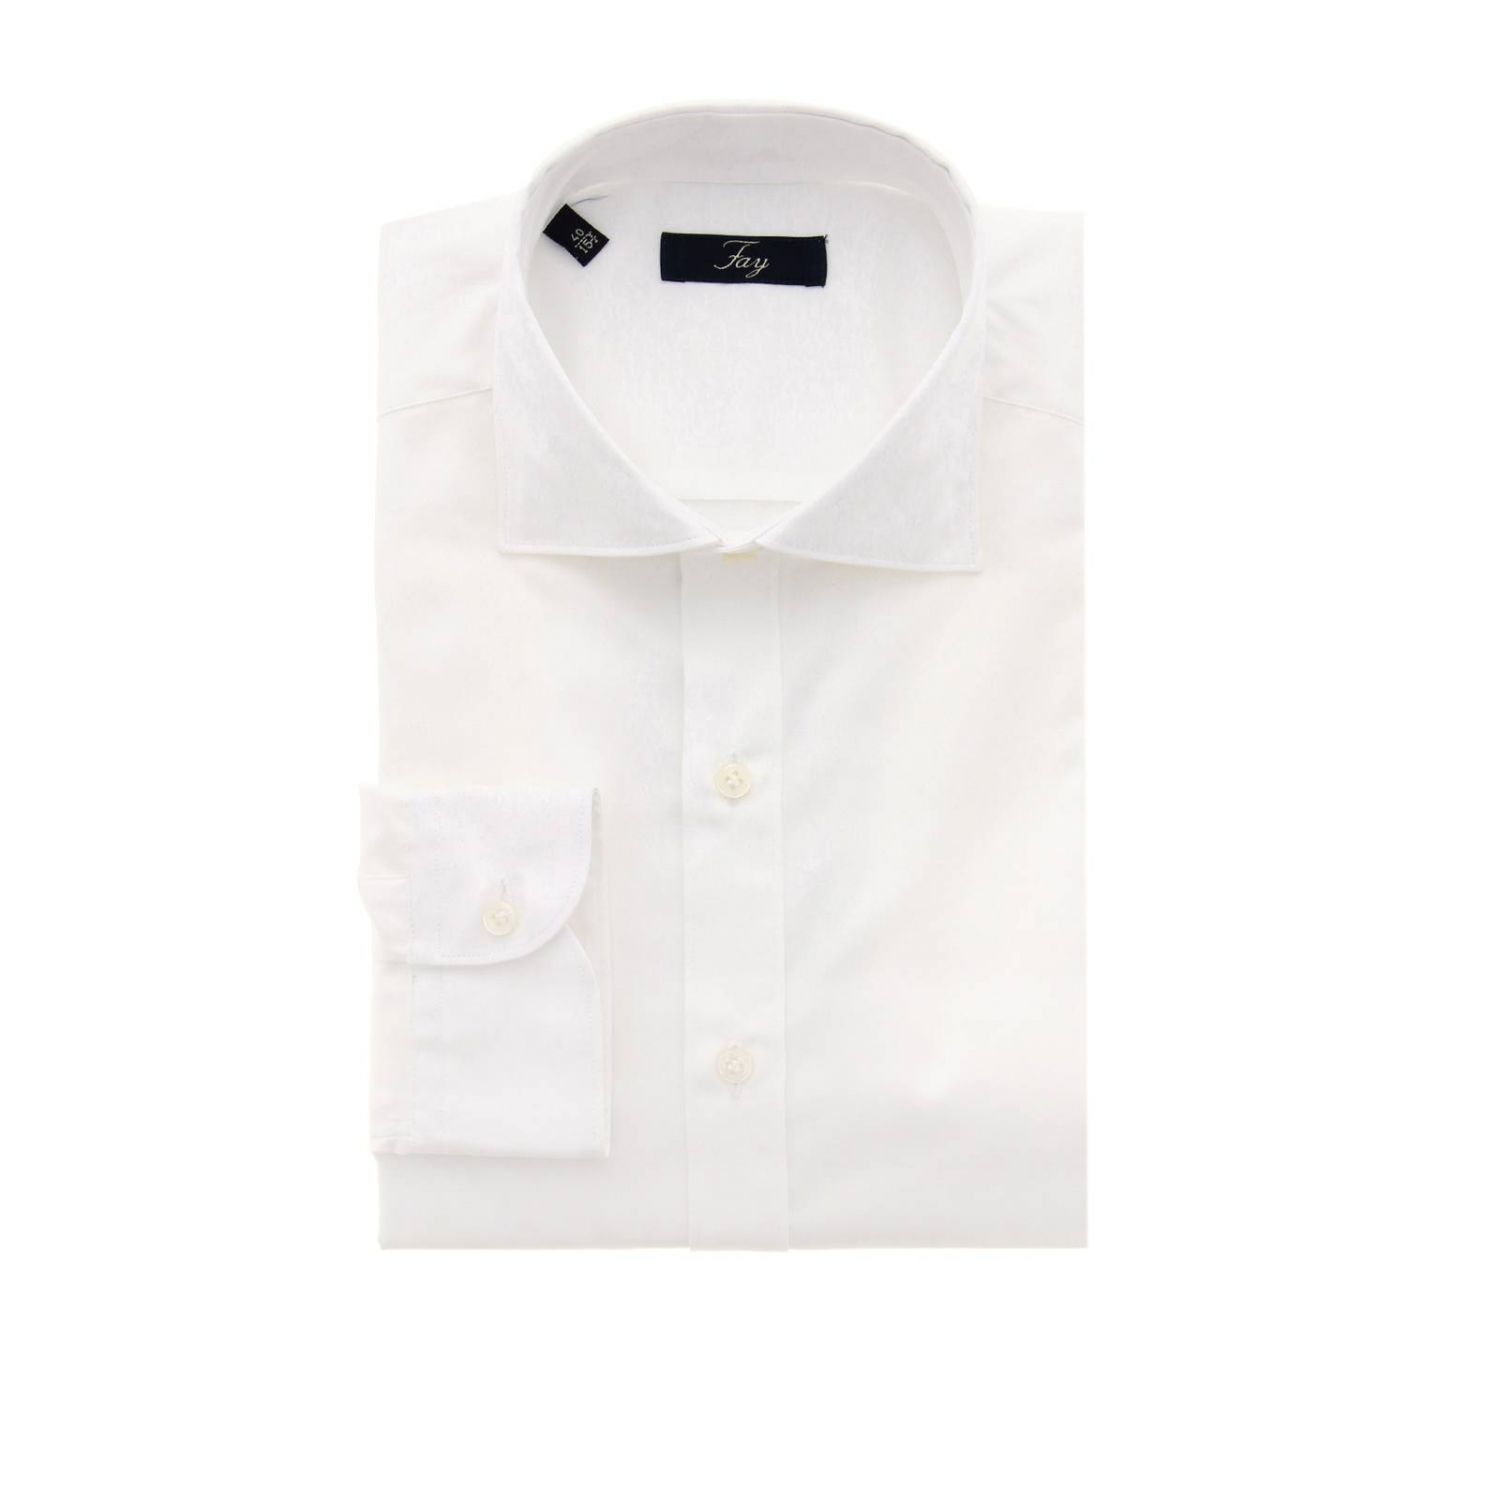 Shirt Fay: Fay shirt for man white 1